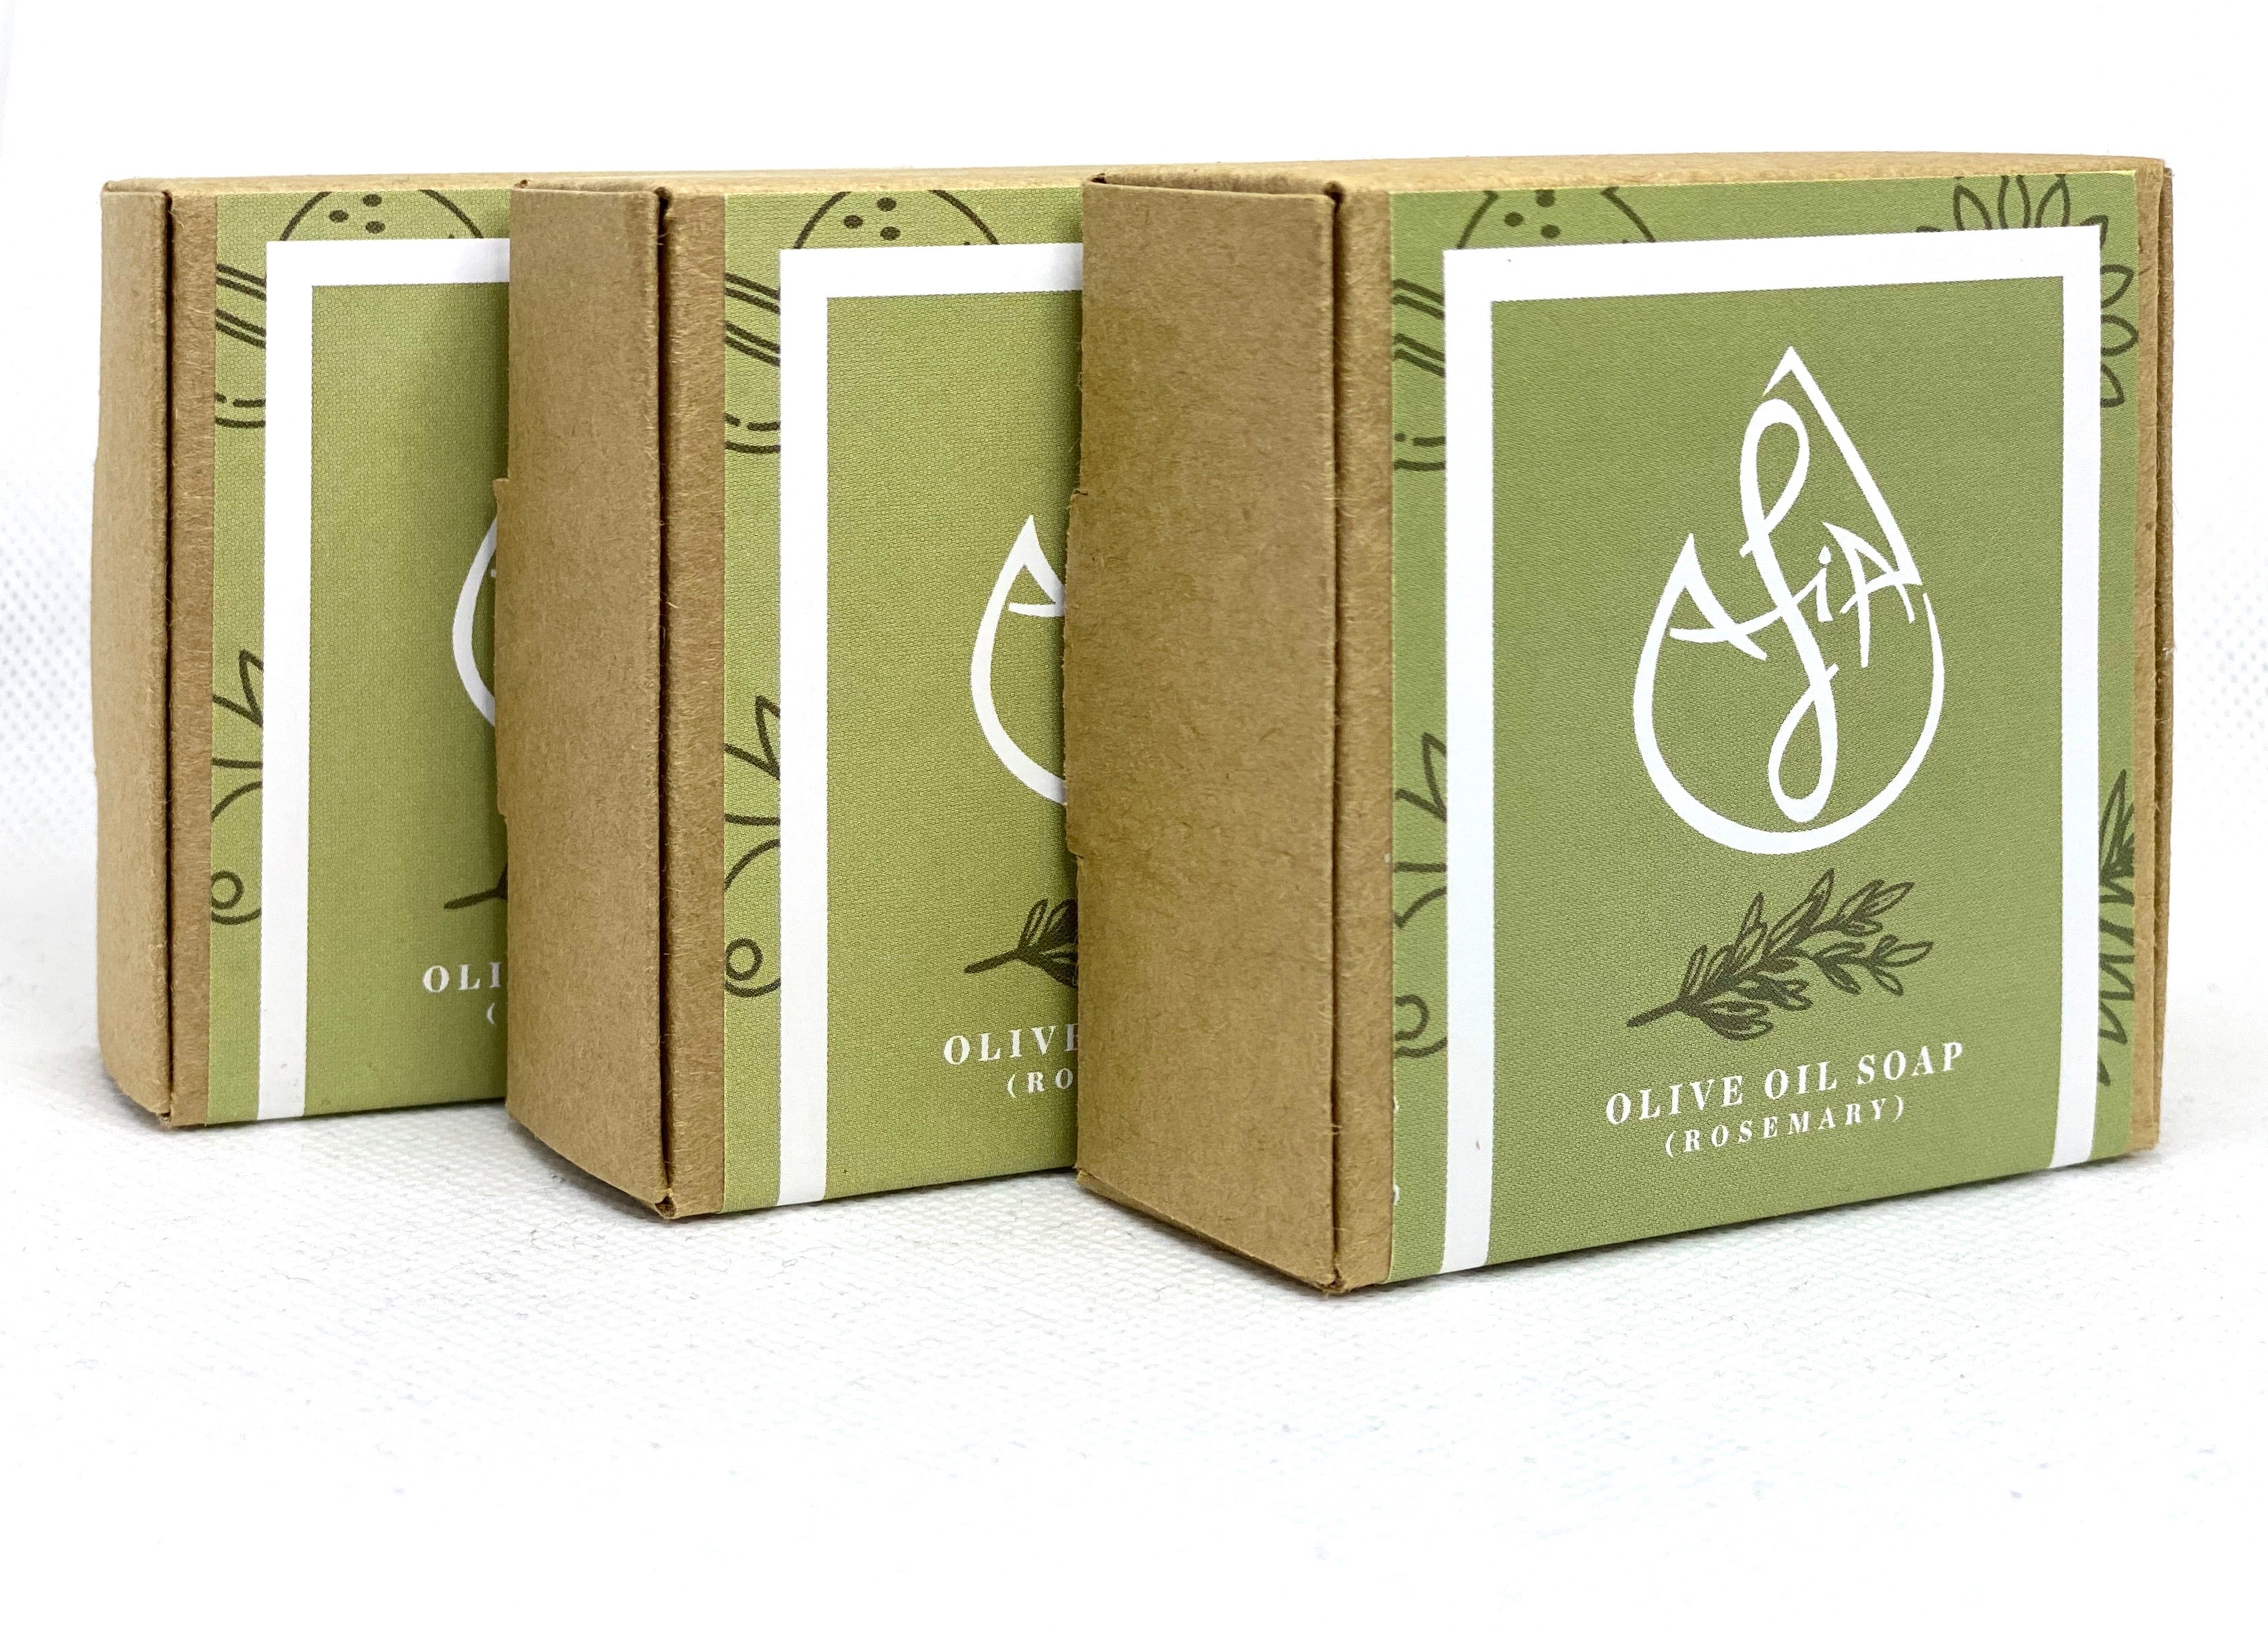 Rosemary | AFIA Olive Oil Soap - 3 Pack